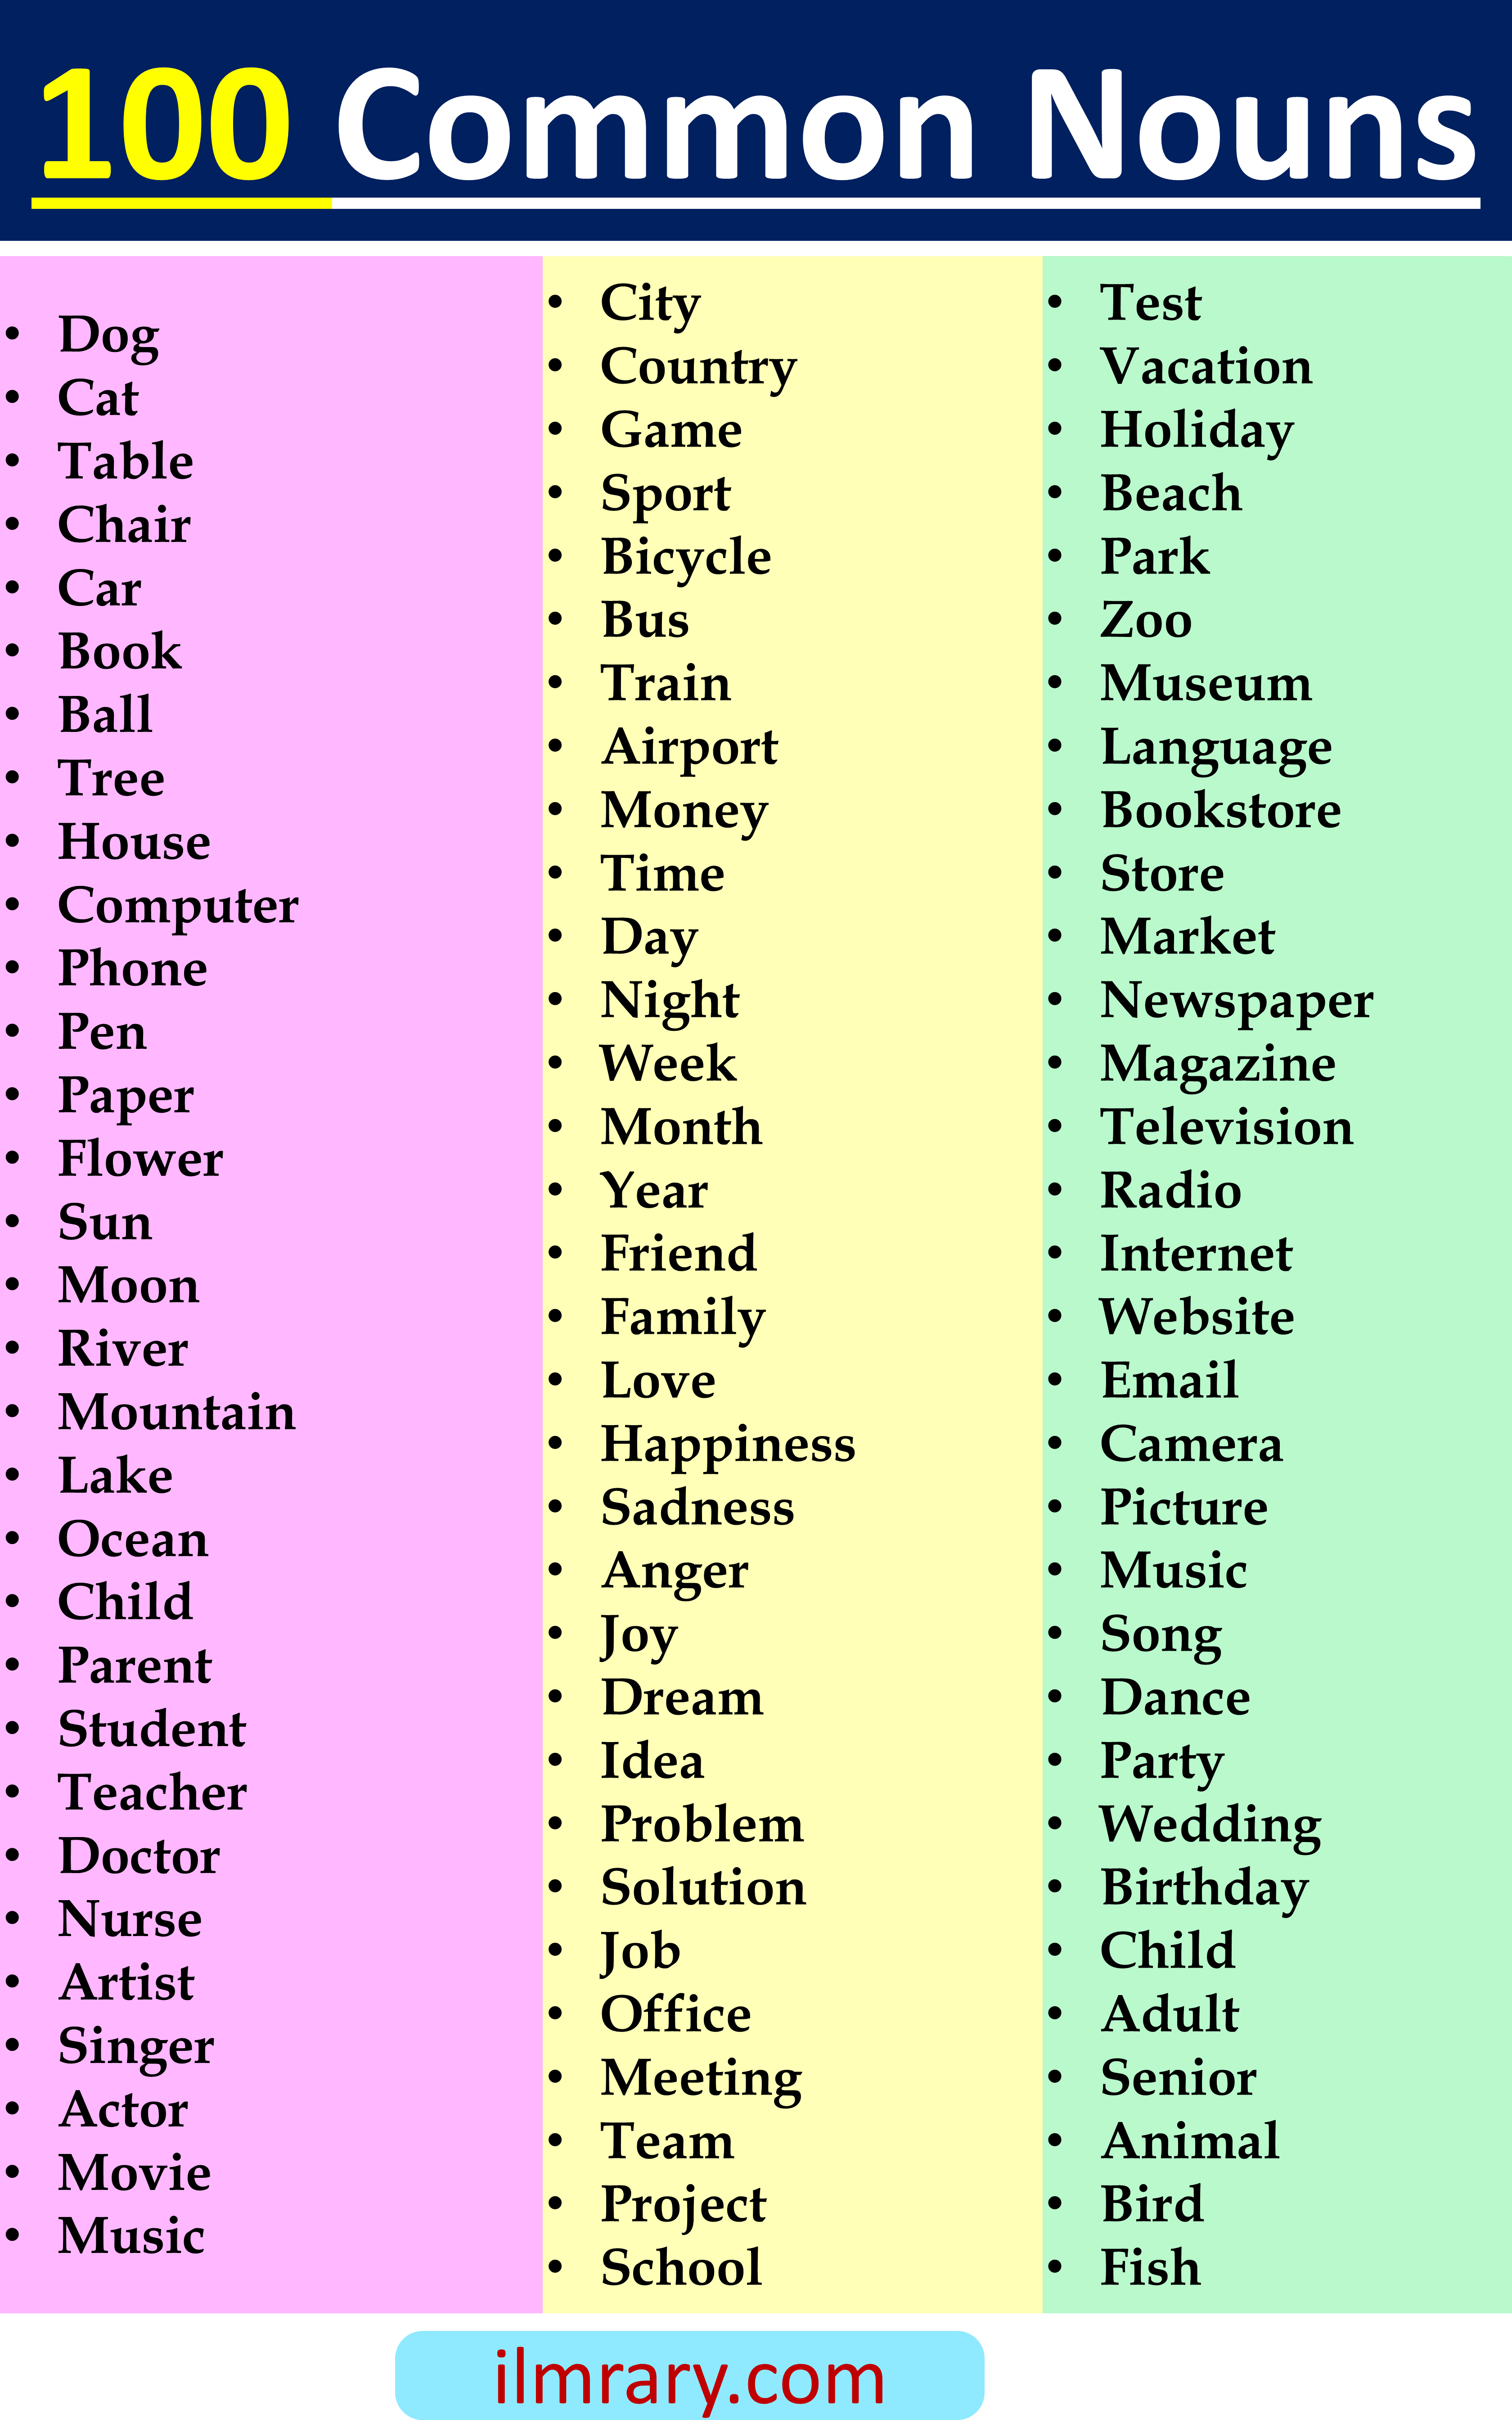 100 Common Nouns List in English